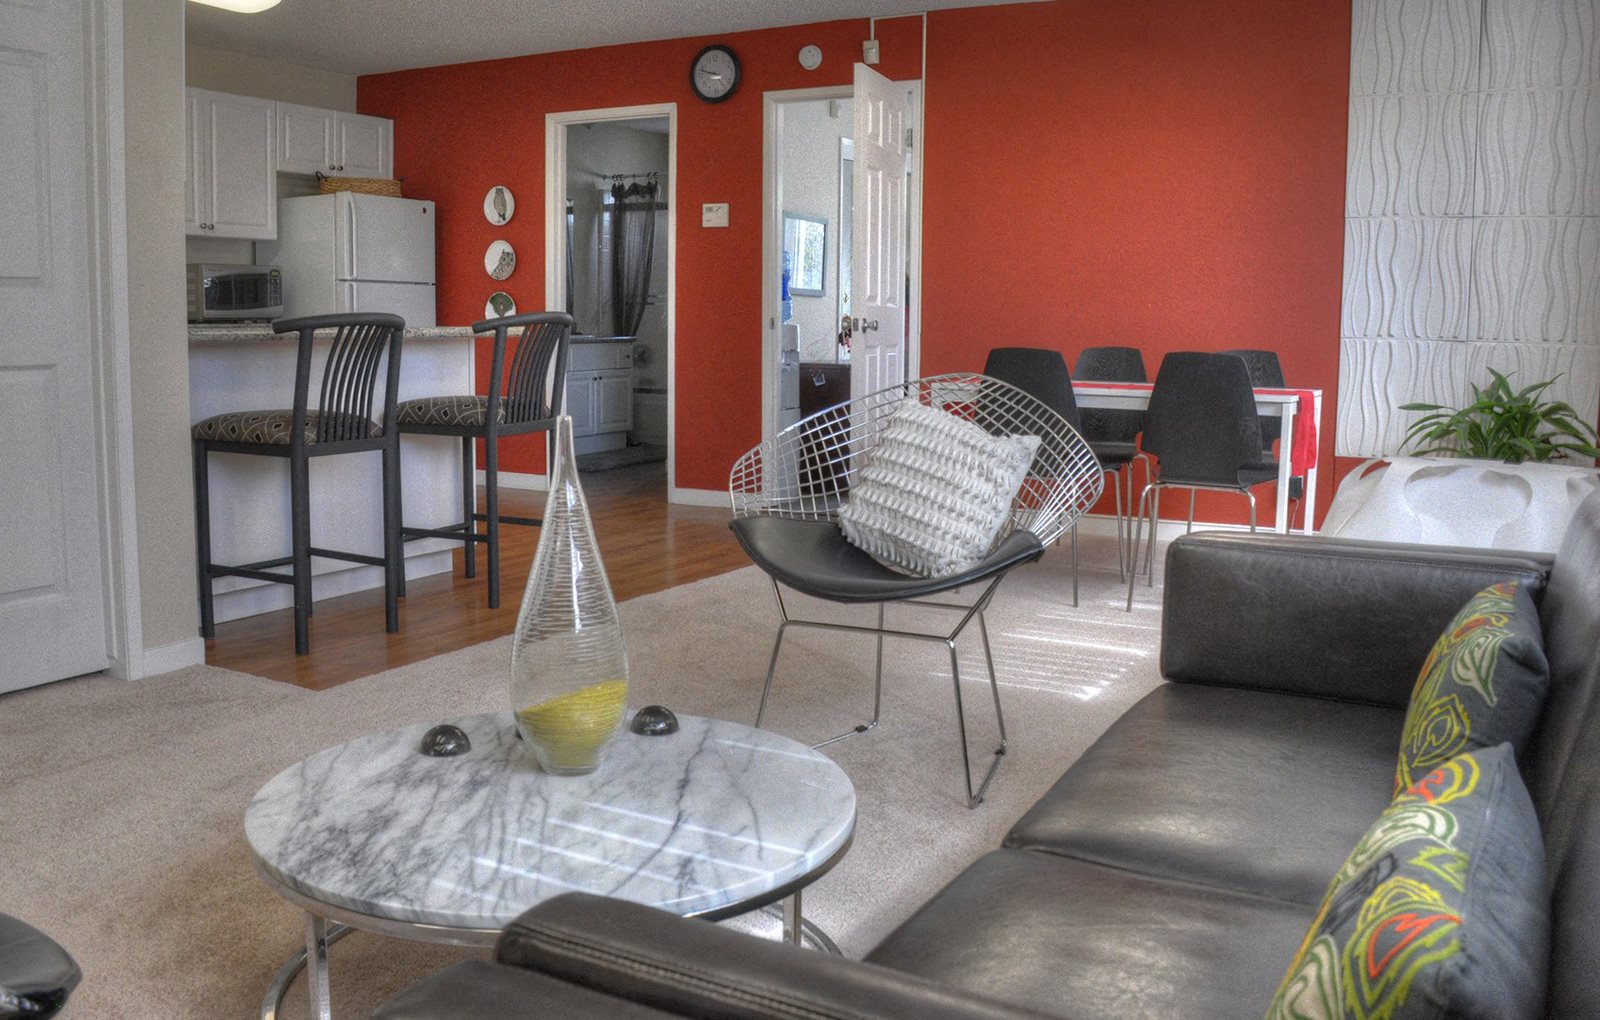 Furnished living room and kitchen model